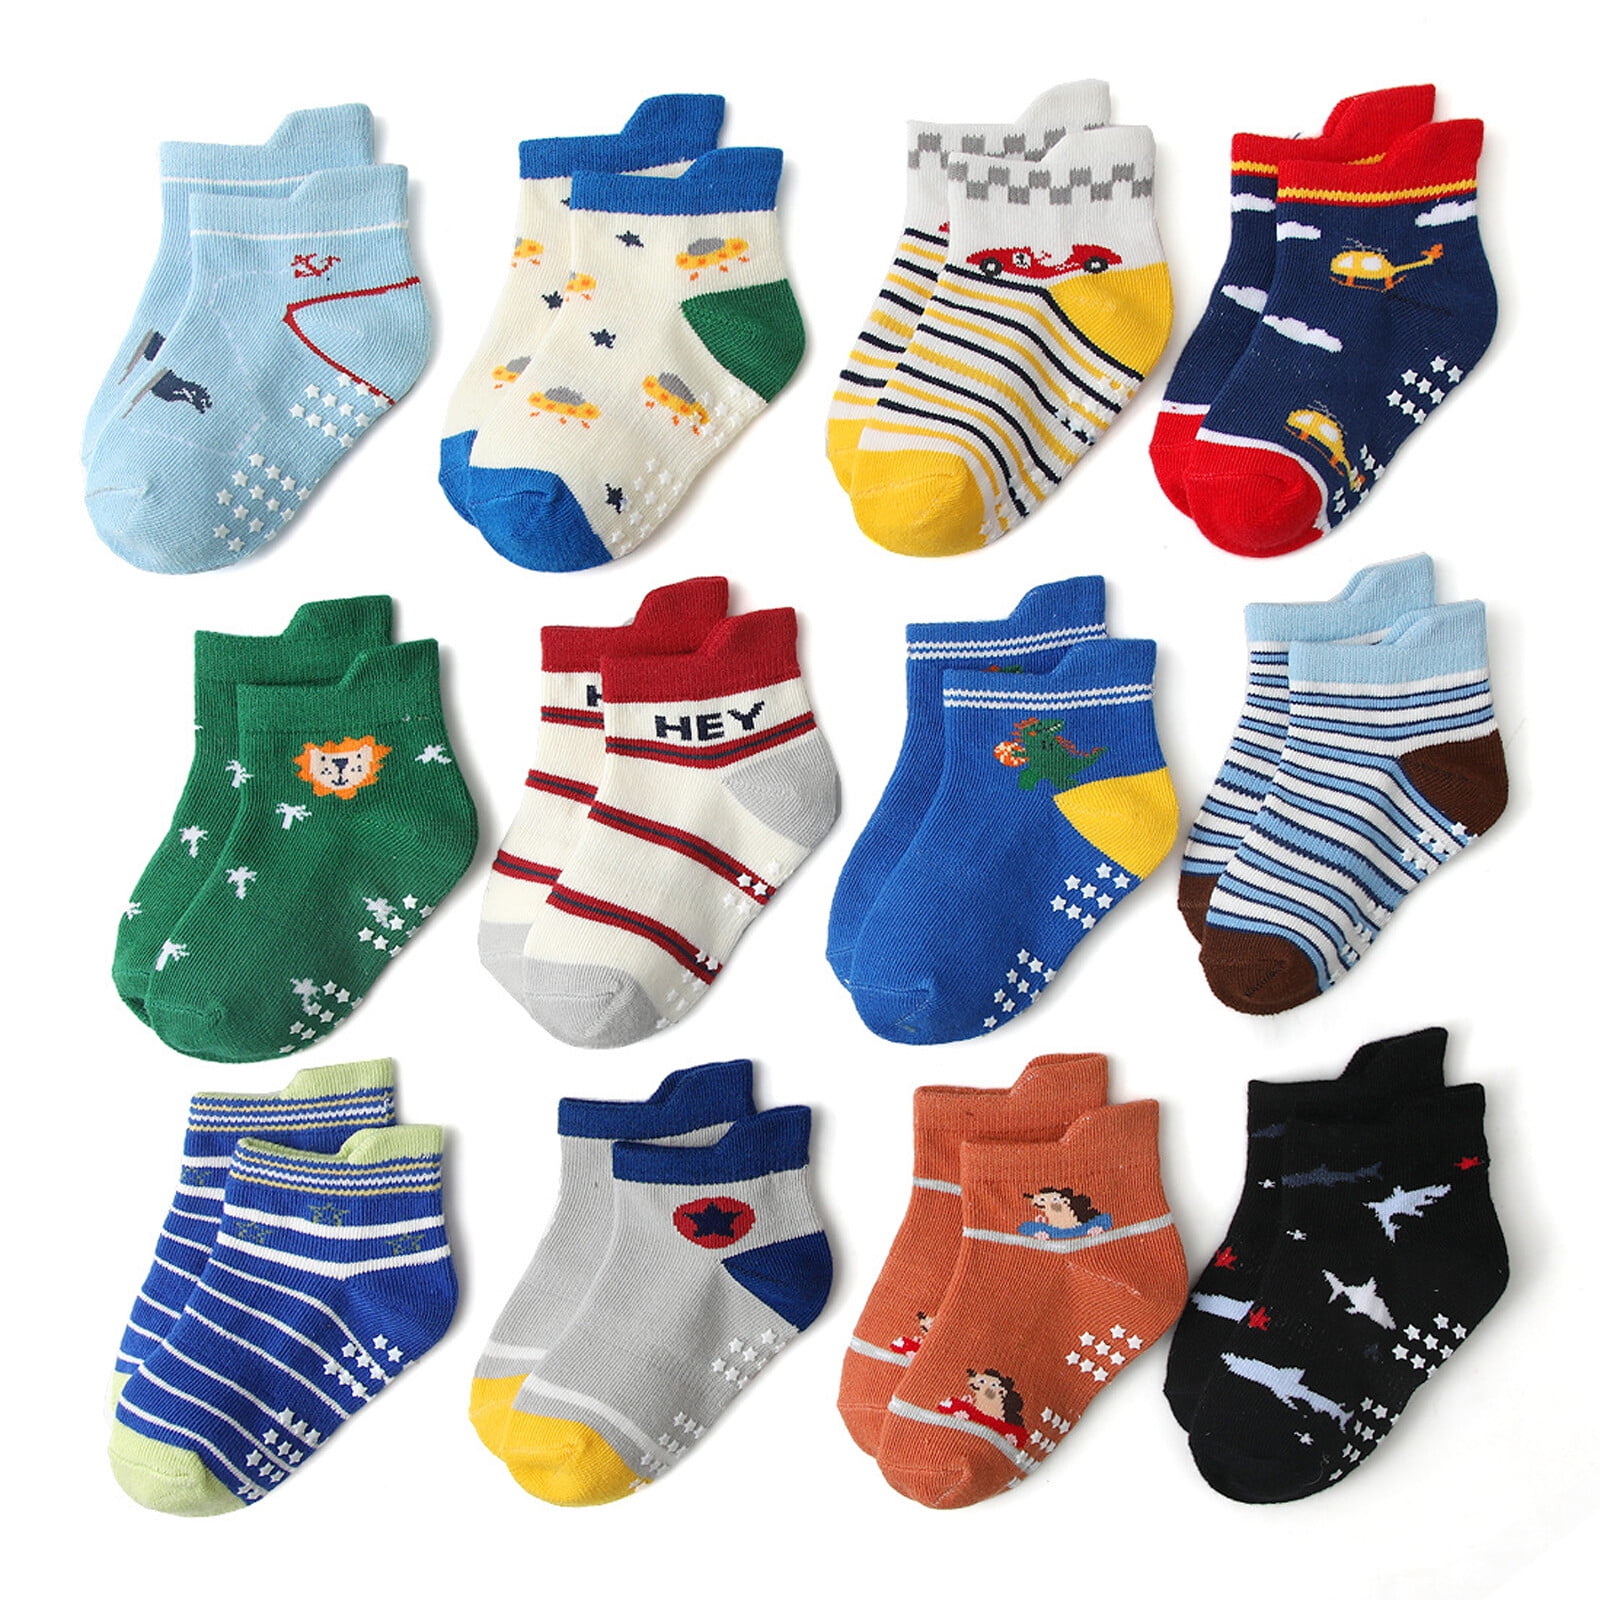 12 Pairs Baby Non Slip Socks Toddler Socks With Grips Ankle For Infants ...